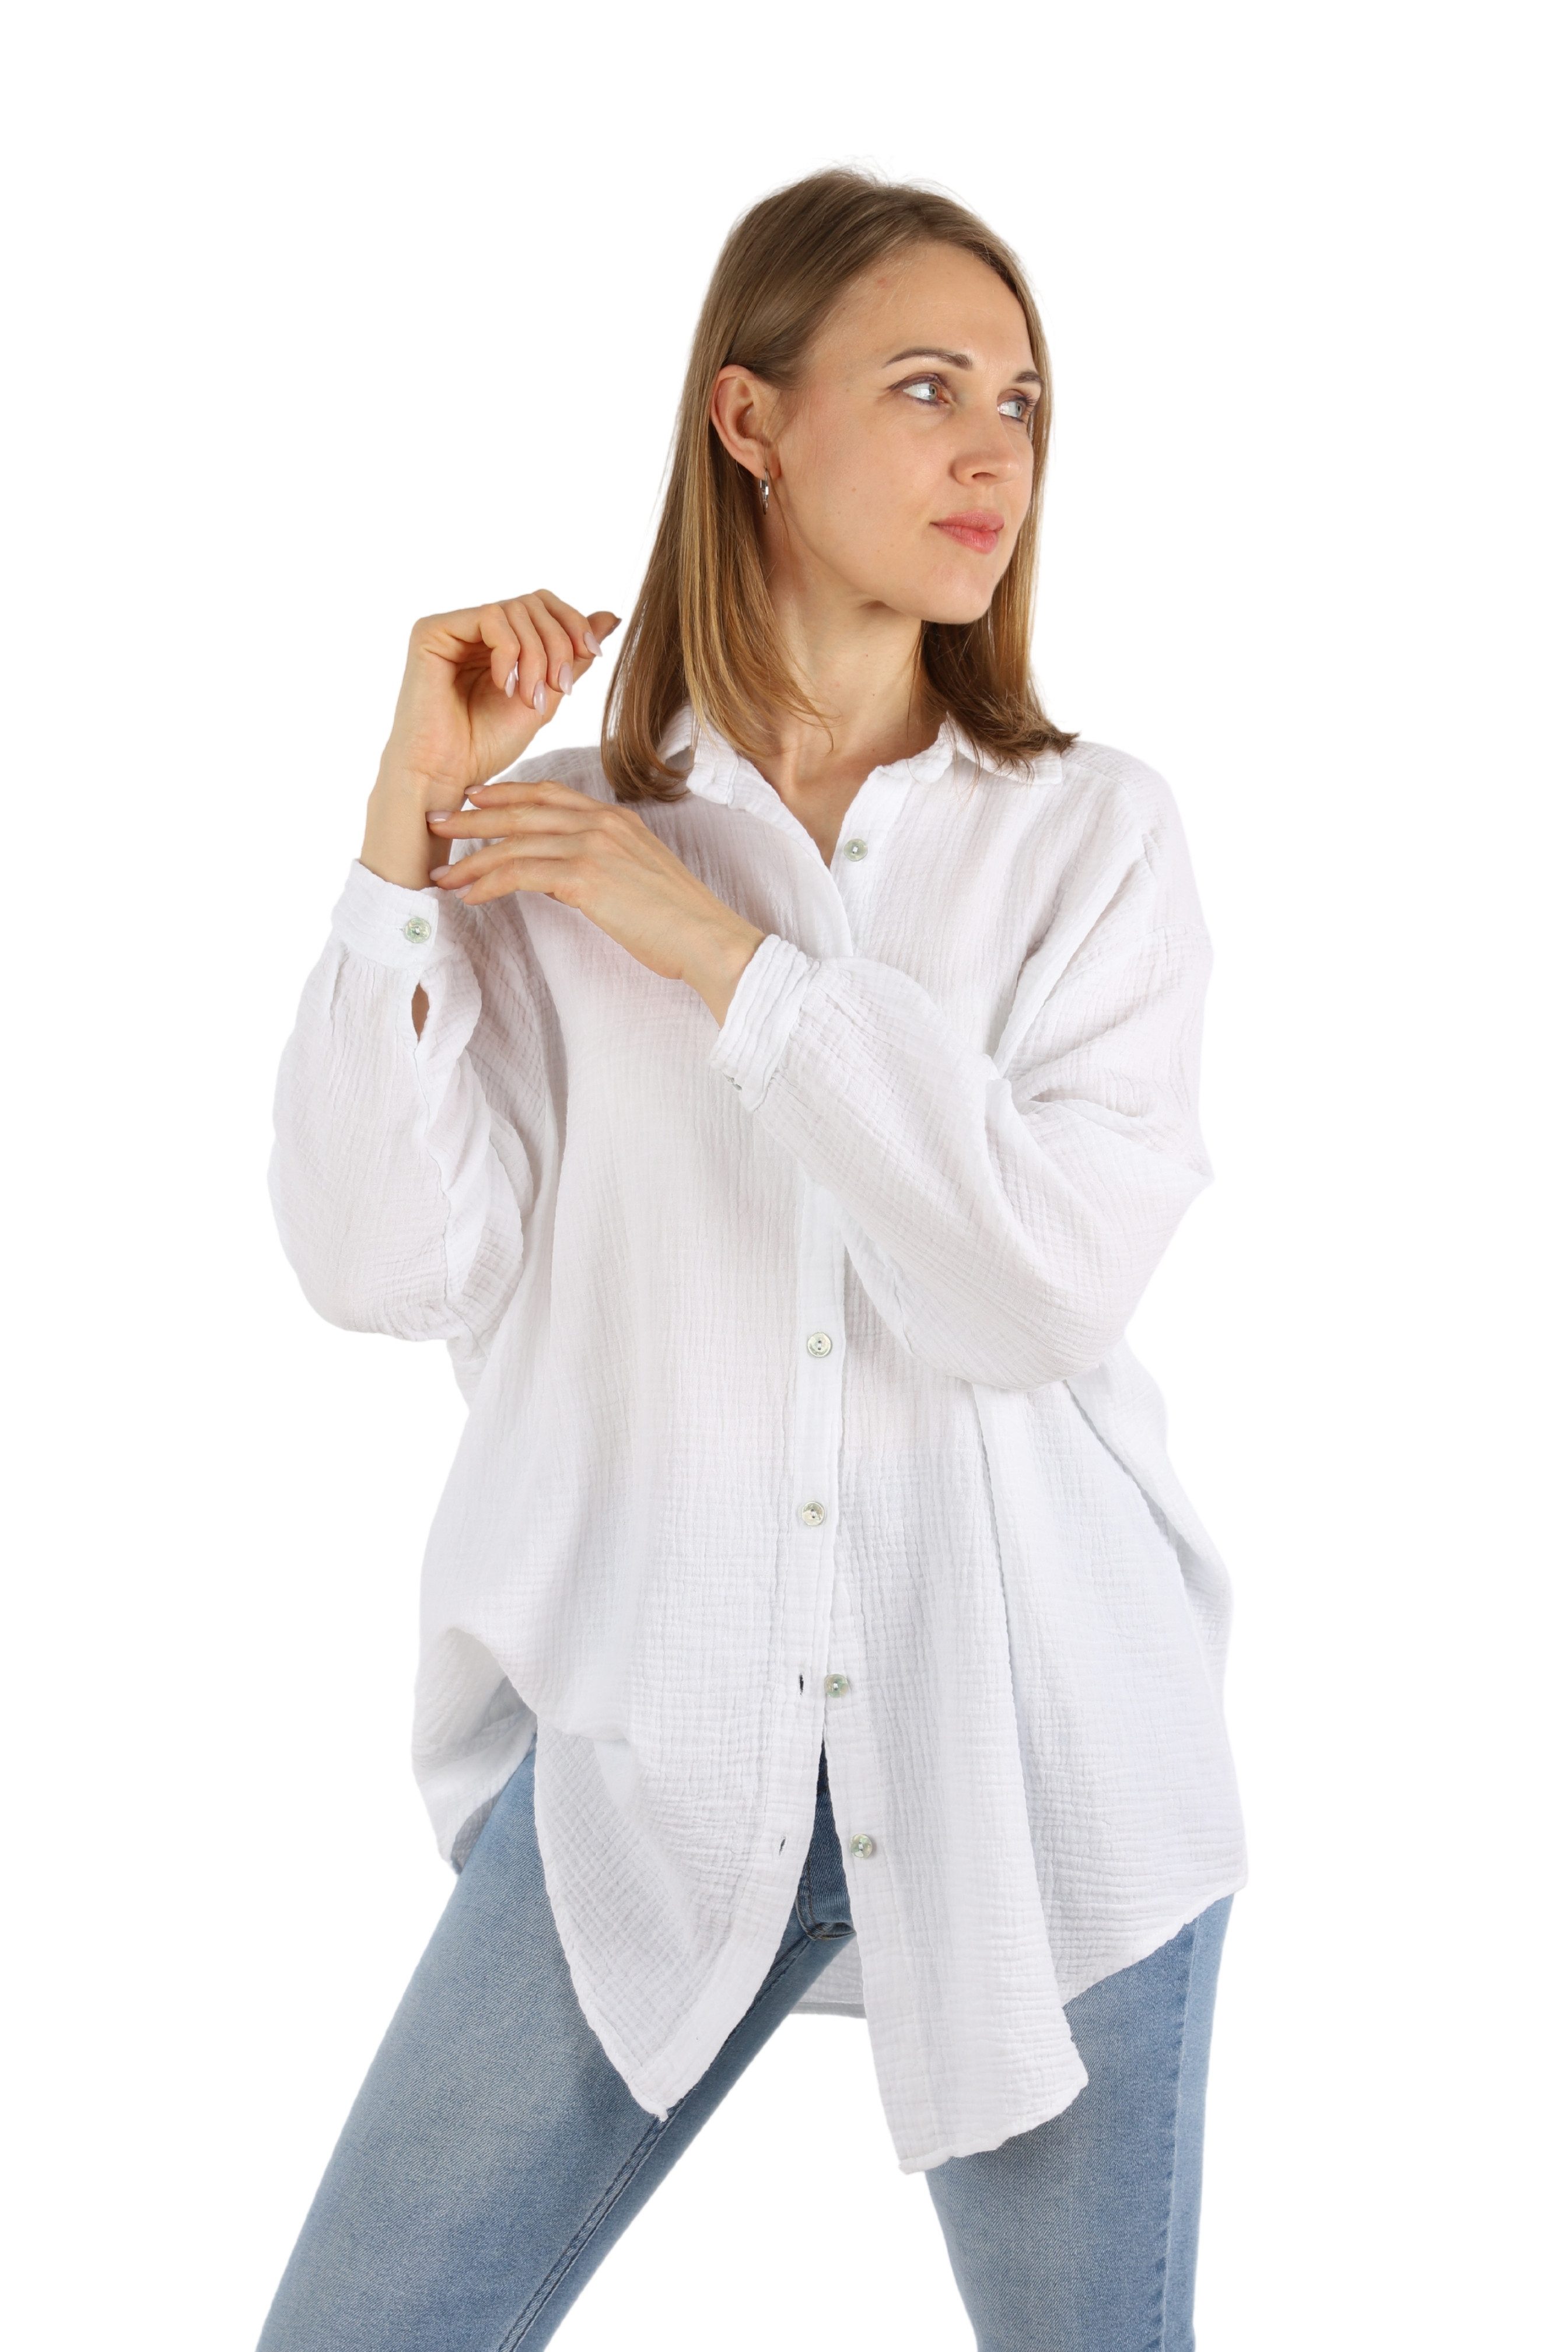 MIRROSI Longbluse Damen Musselin 100% Baumwolle Bluse OVERSIZE Design (Einheitsgröße) Langarm Hemdbluse MADE IN ITALY